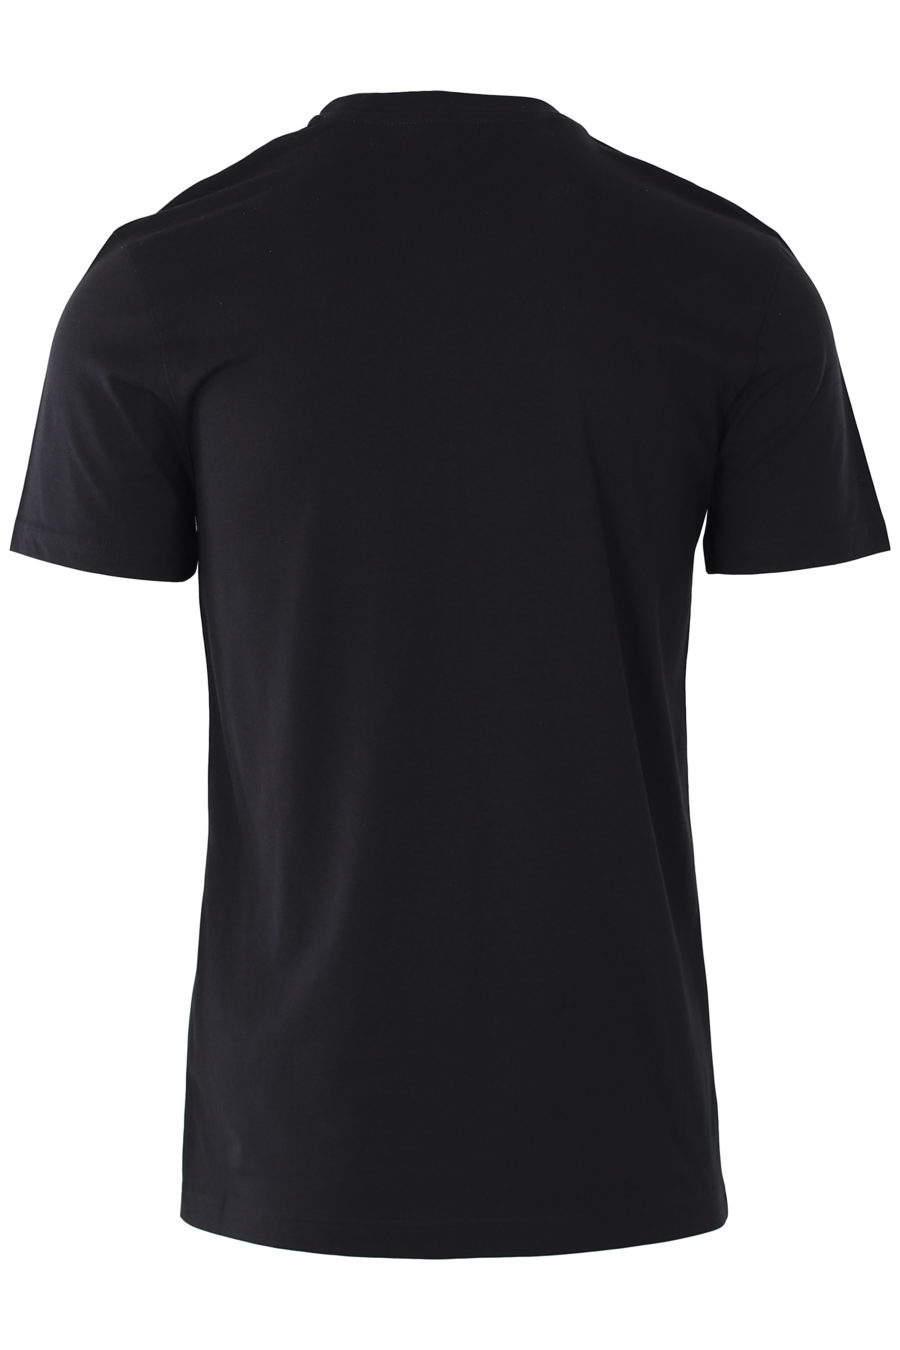 Camiseta negra con logo milano "fantasy" - IMG 9339